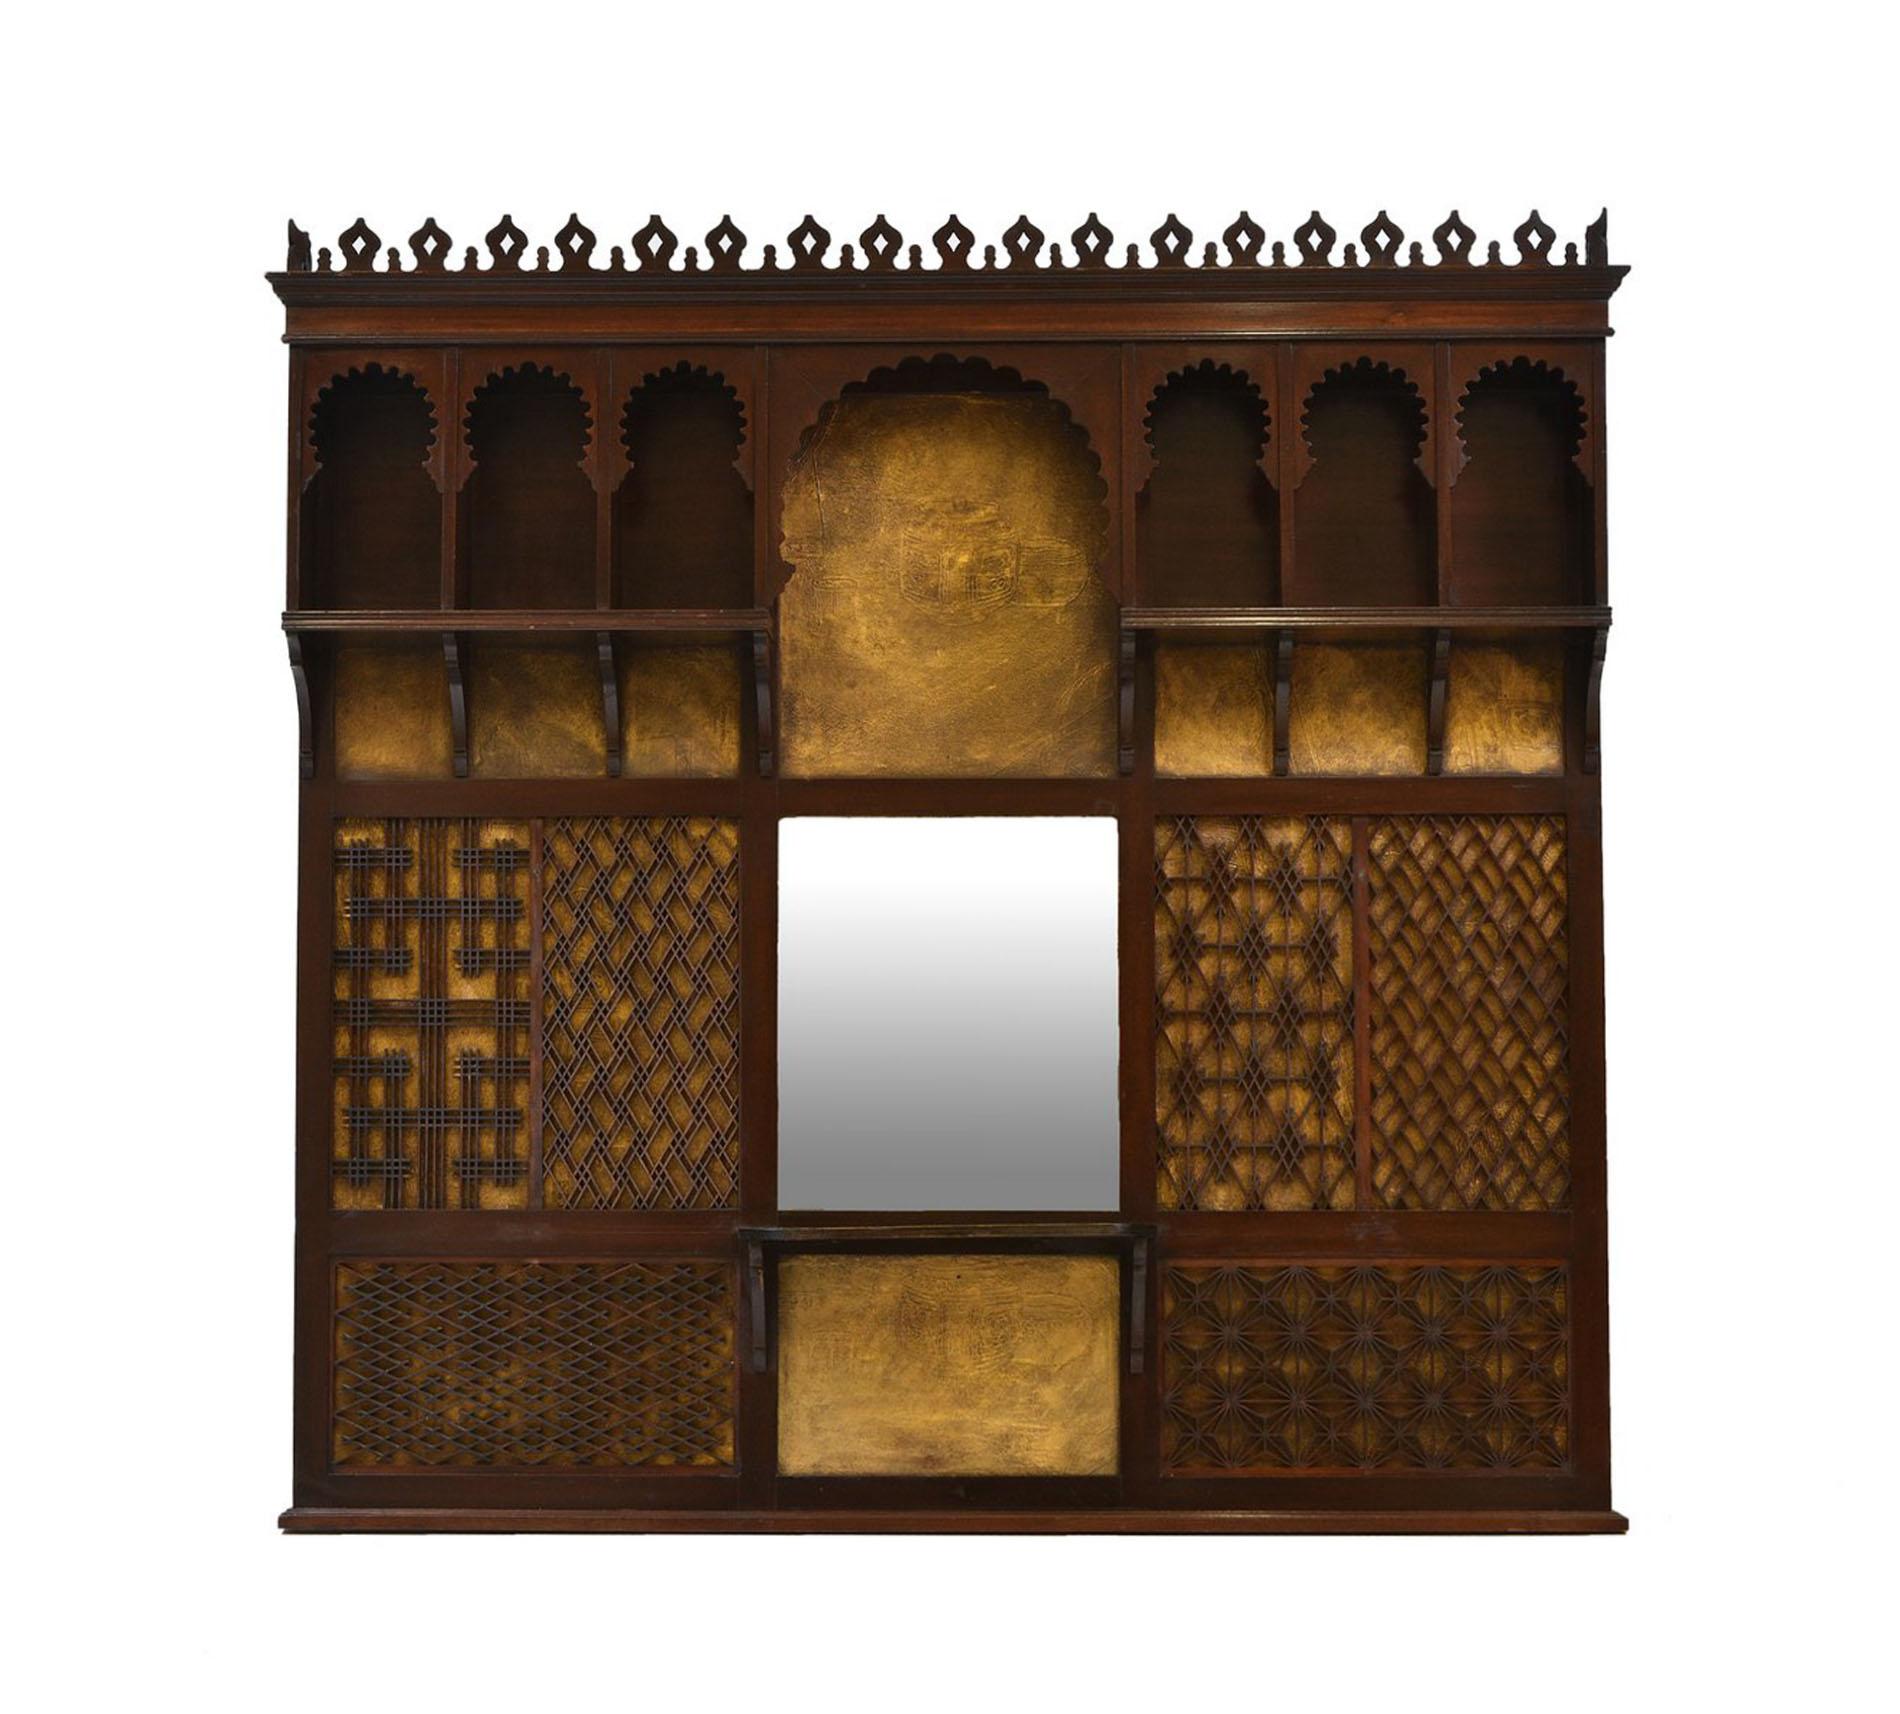 Antique Aesthetic Movement Large Decorative Wall Mantle Moorish Mirror 1